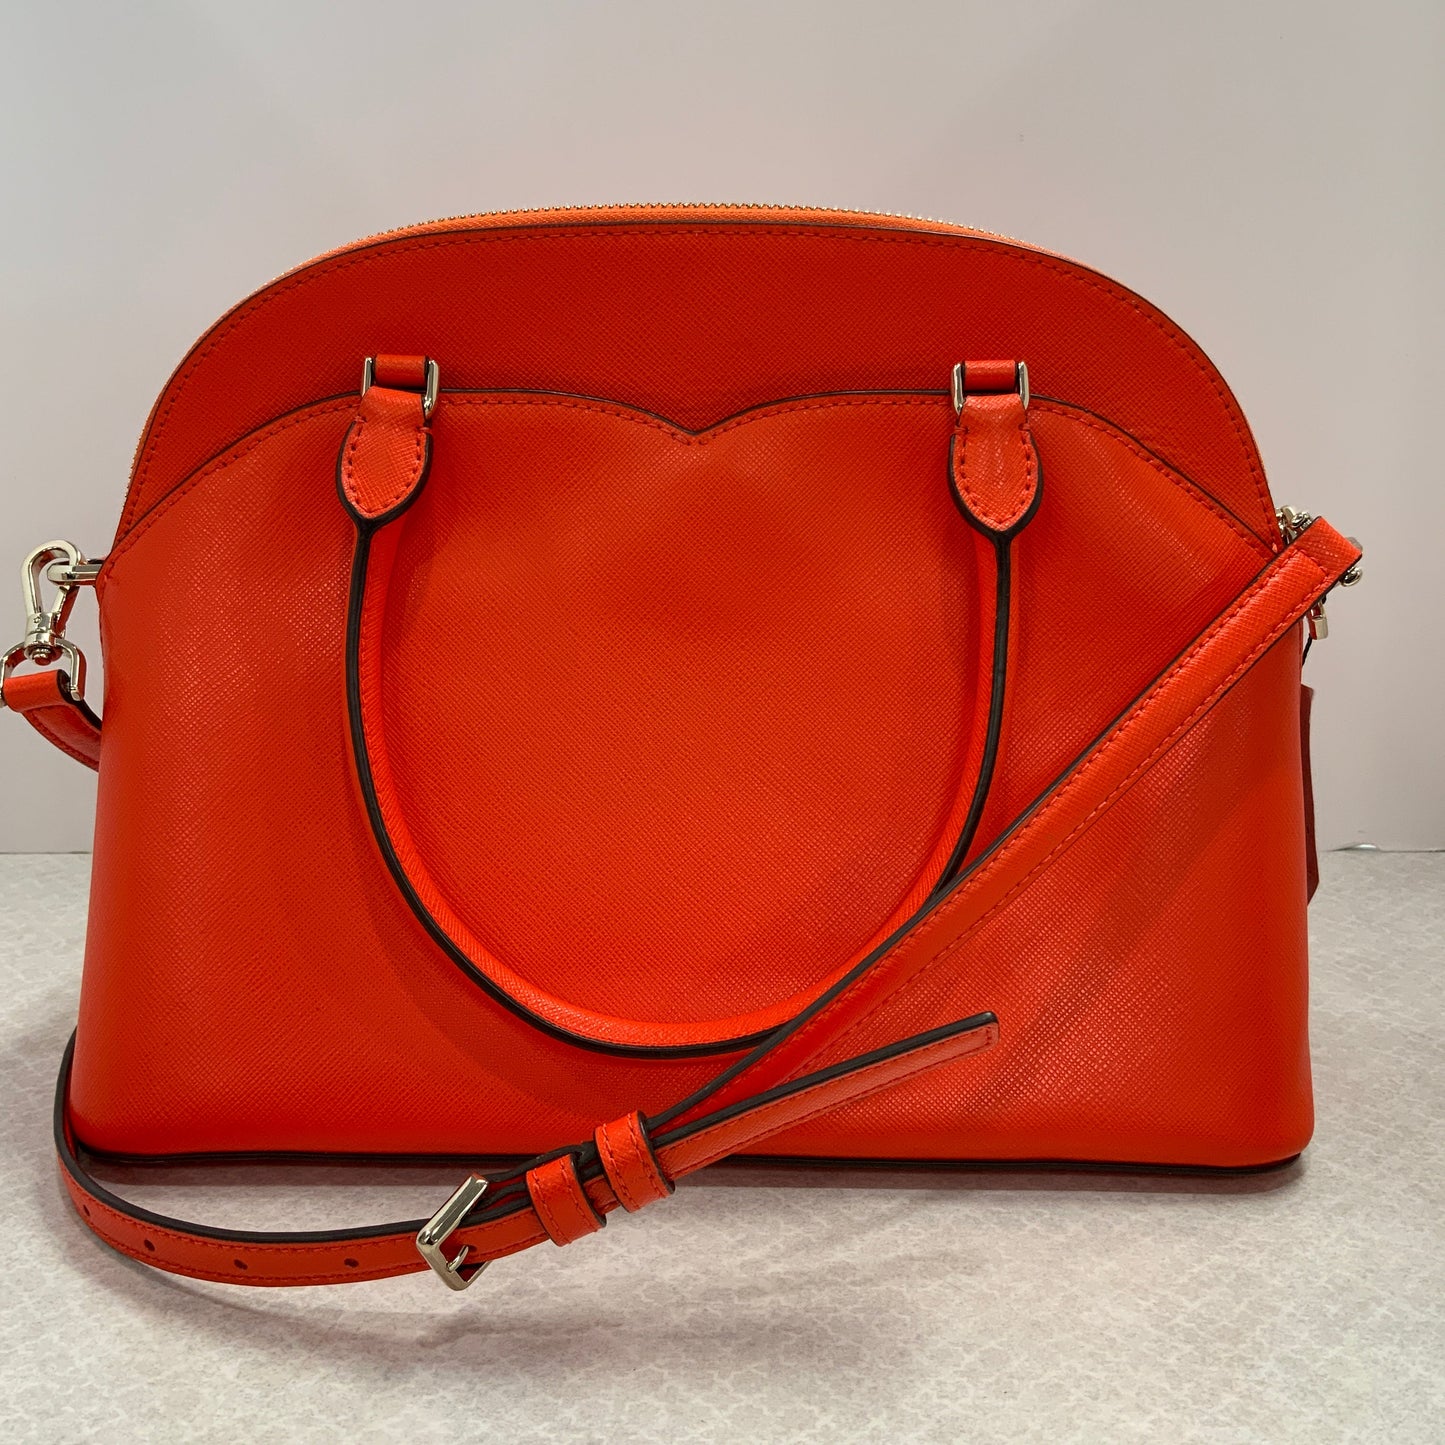 Handbag Designer Kate Spade, Size Medium